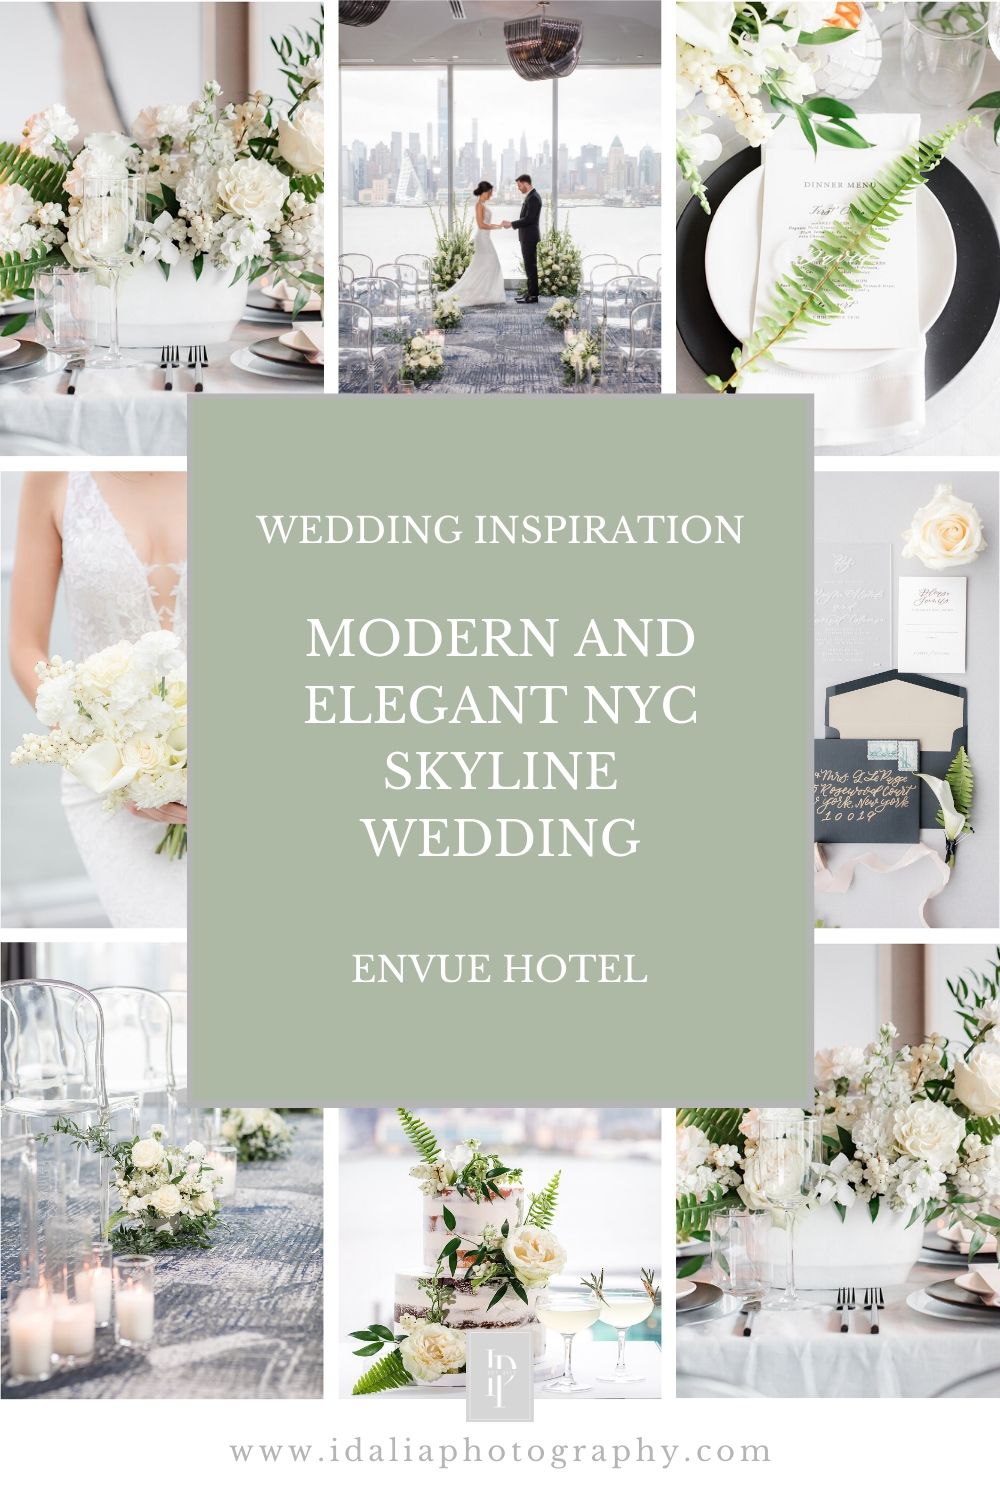 Modern and elegant NYC skyline wedding at Envue Hotel in Weehawken, NJ. Photos by Idalia Photography.